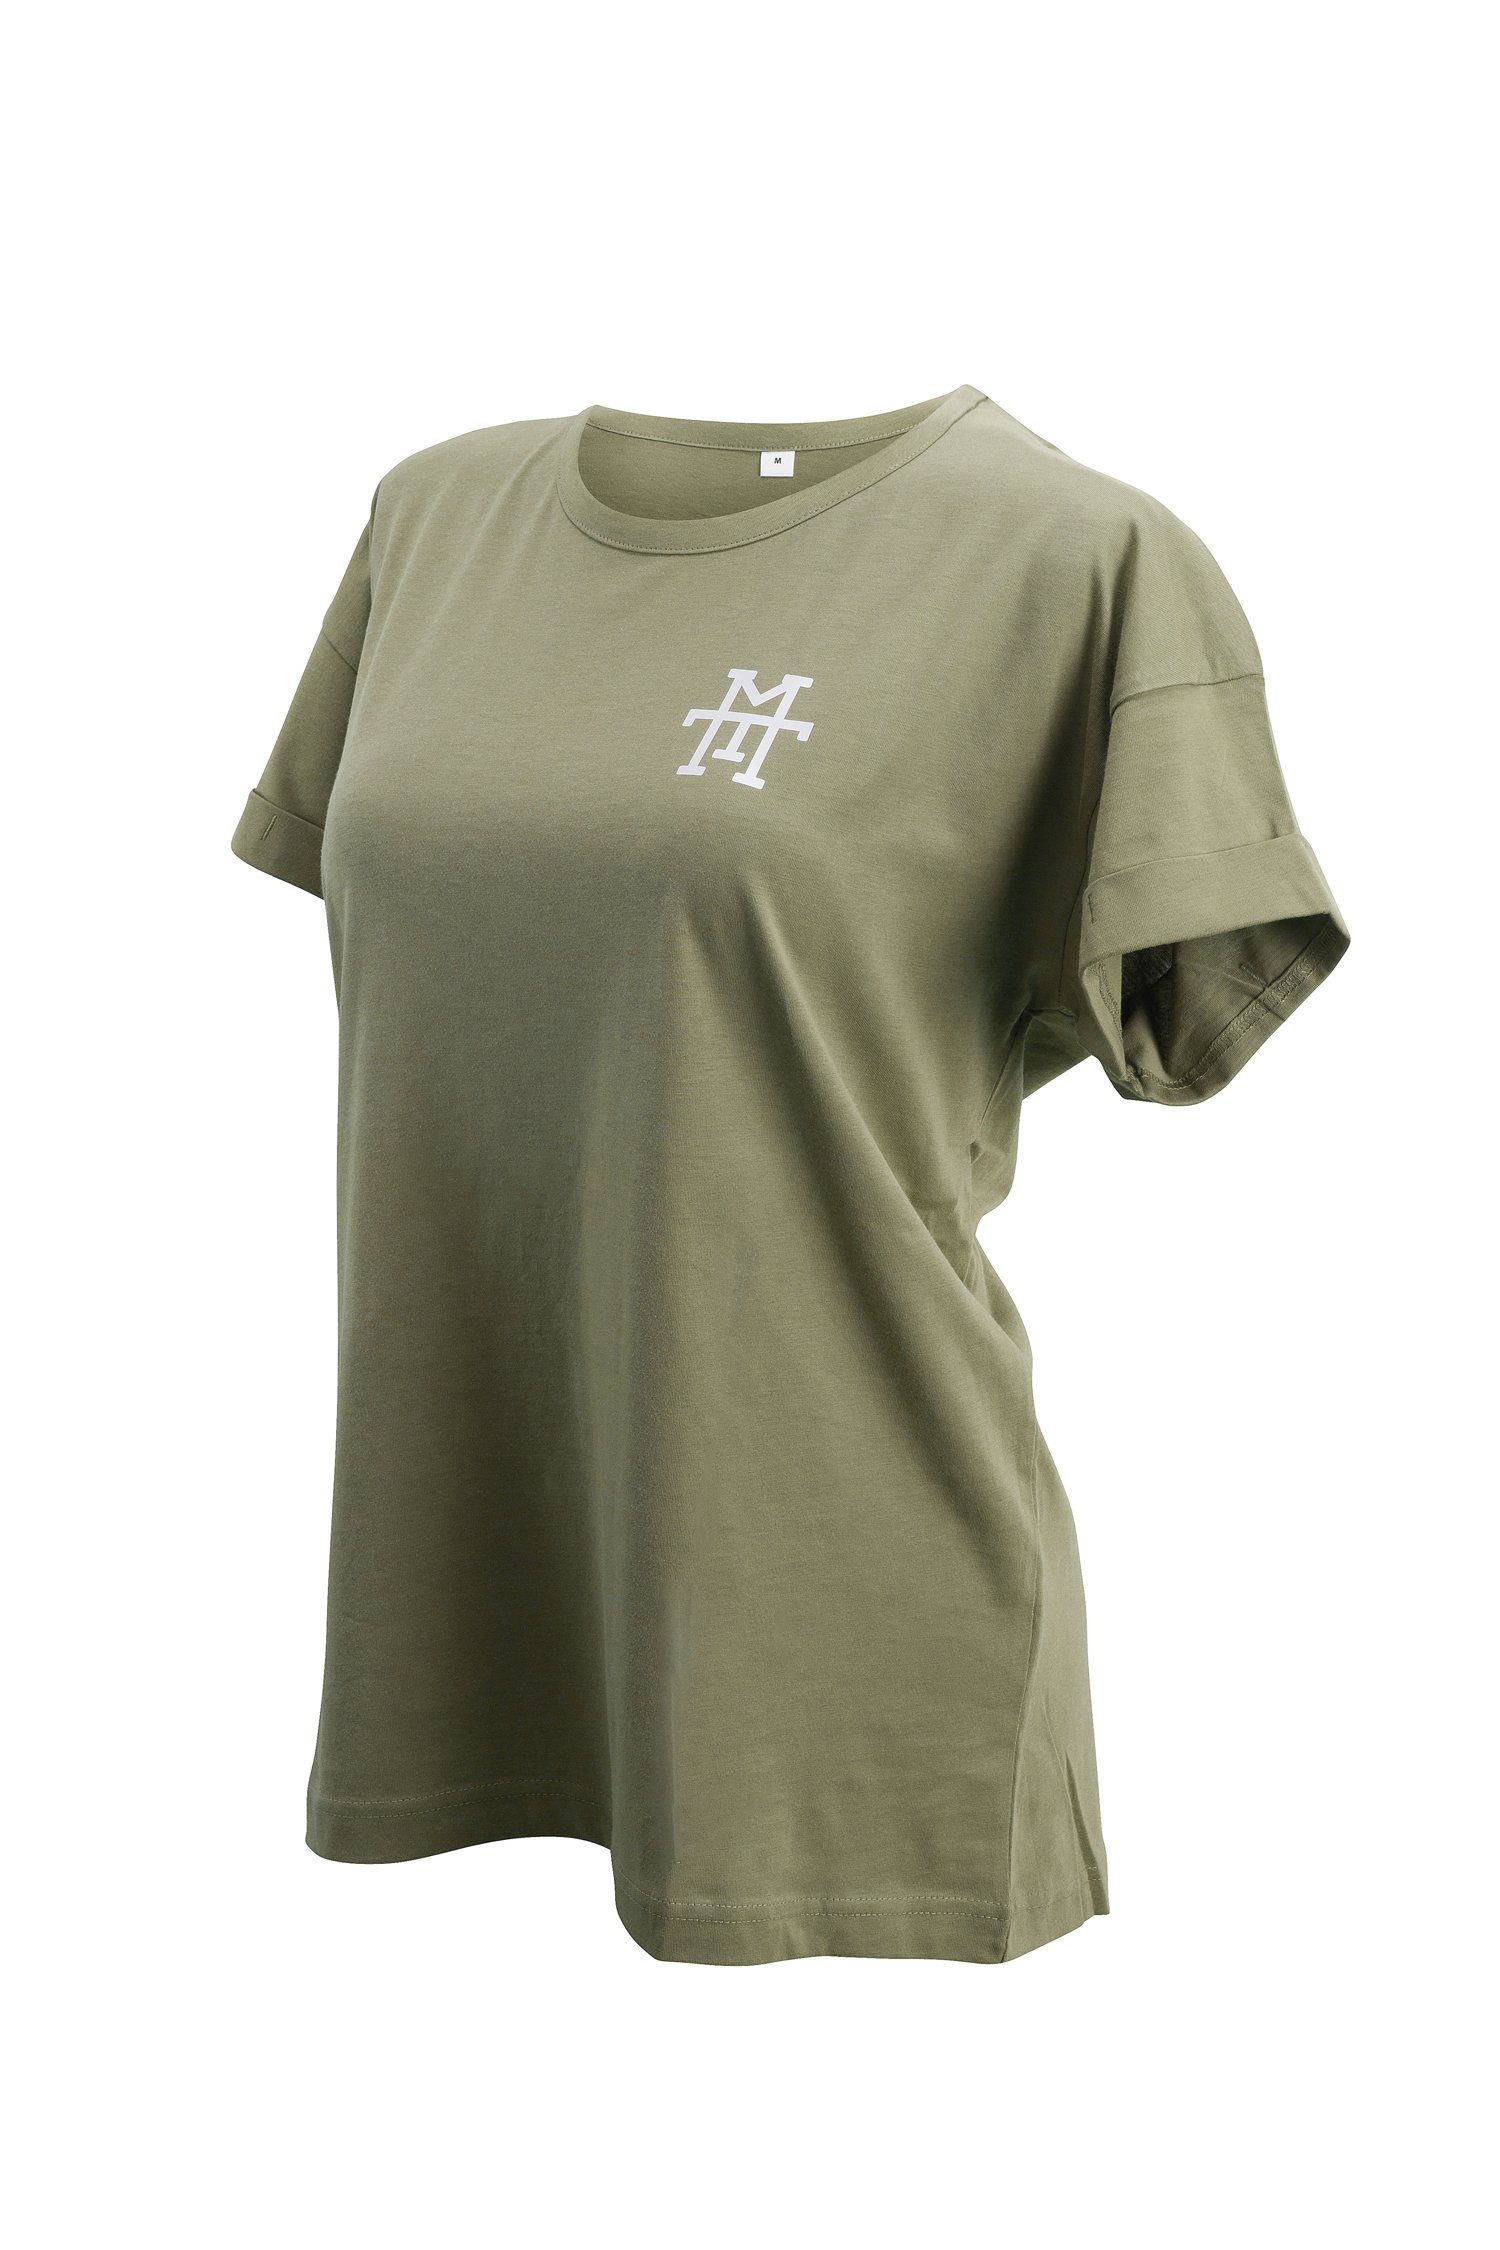 - T-Shirt T-Shirt Baumwolle Olive Oversize Manufaktur13 T-Shirt Boyfriend 100%